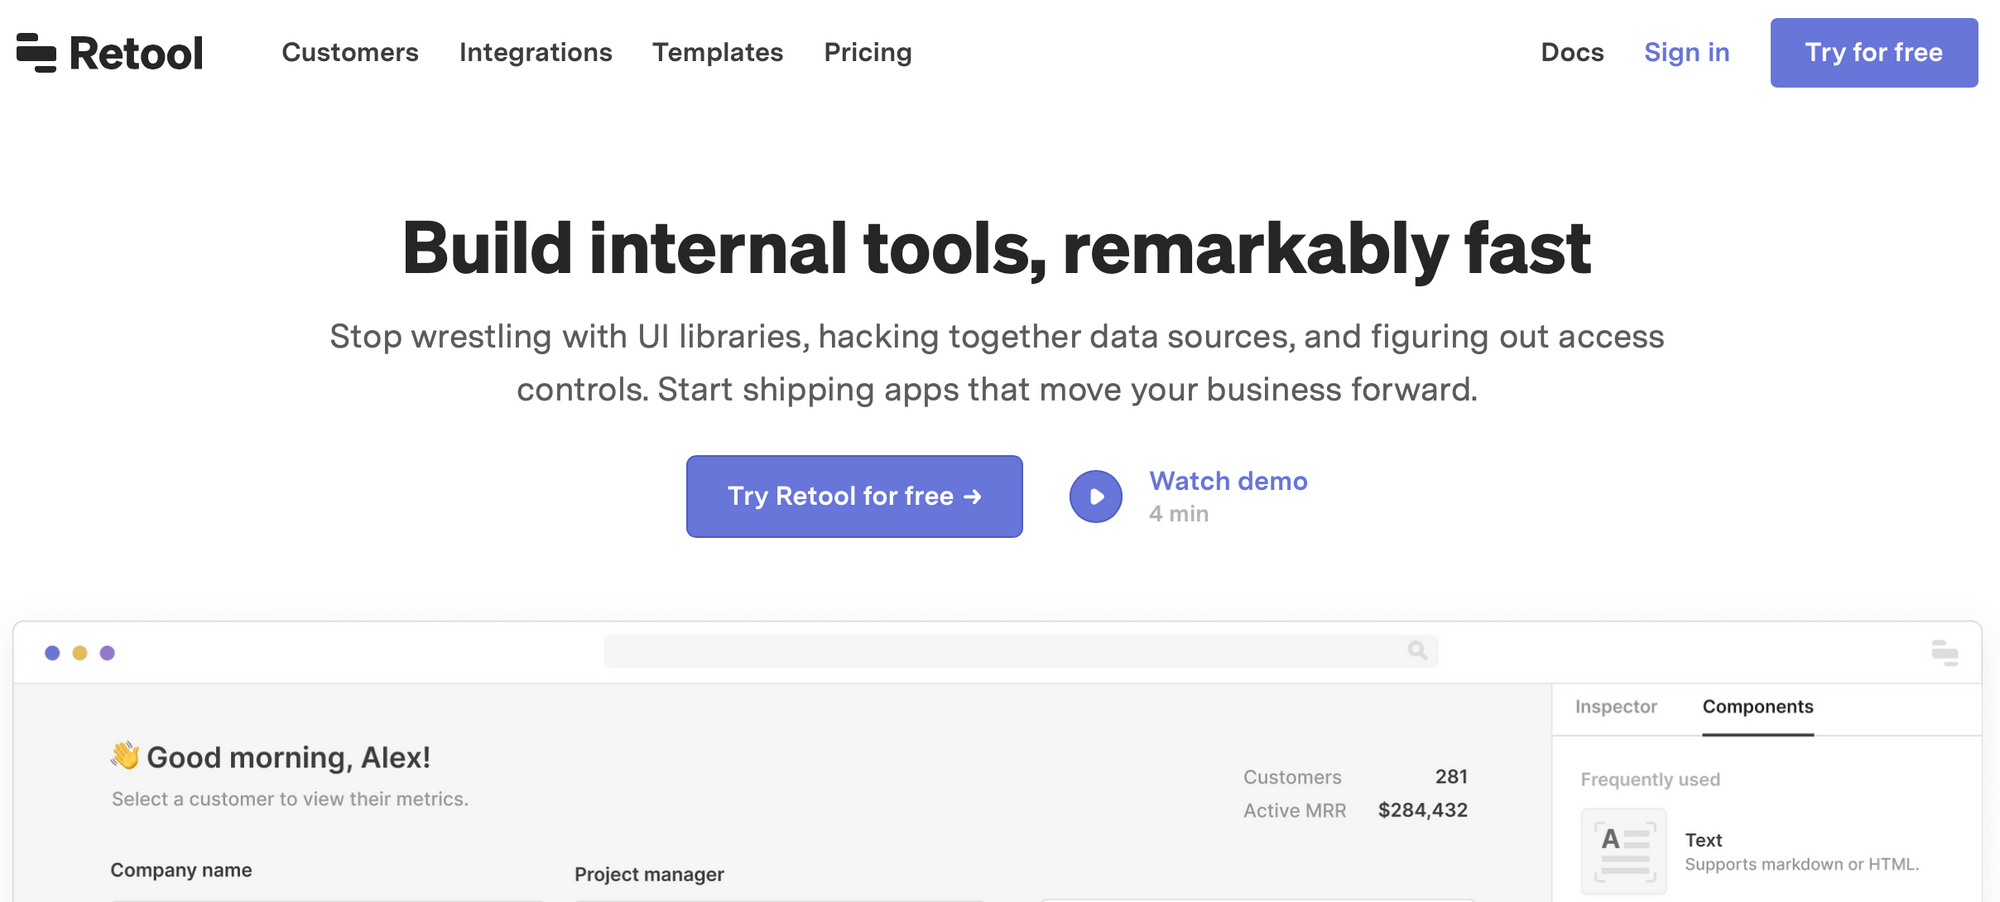 retool build internal tools fast